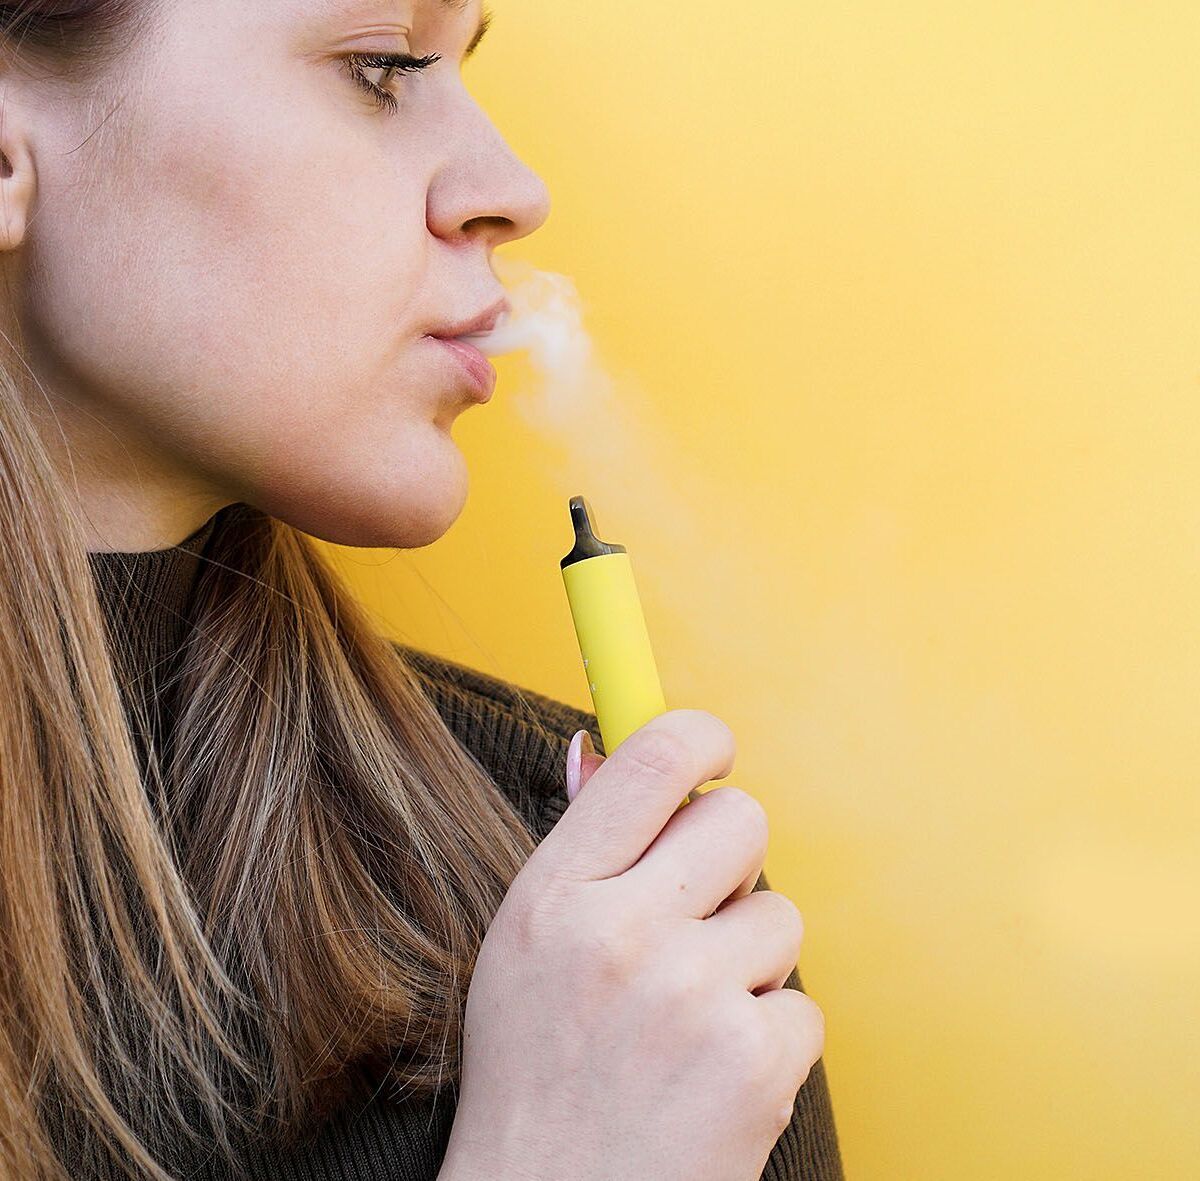 Junge Frau raucht e-Zigarette